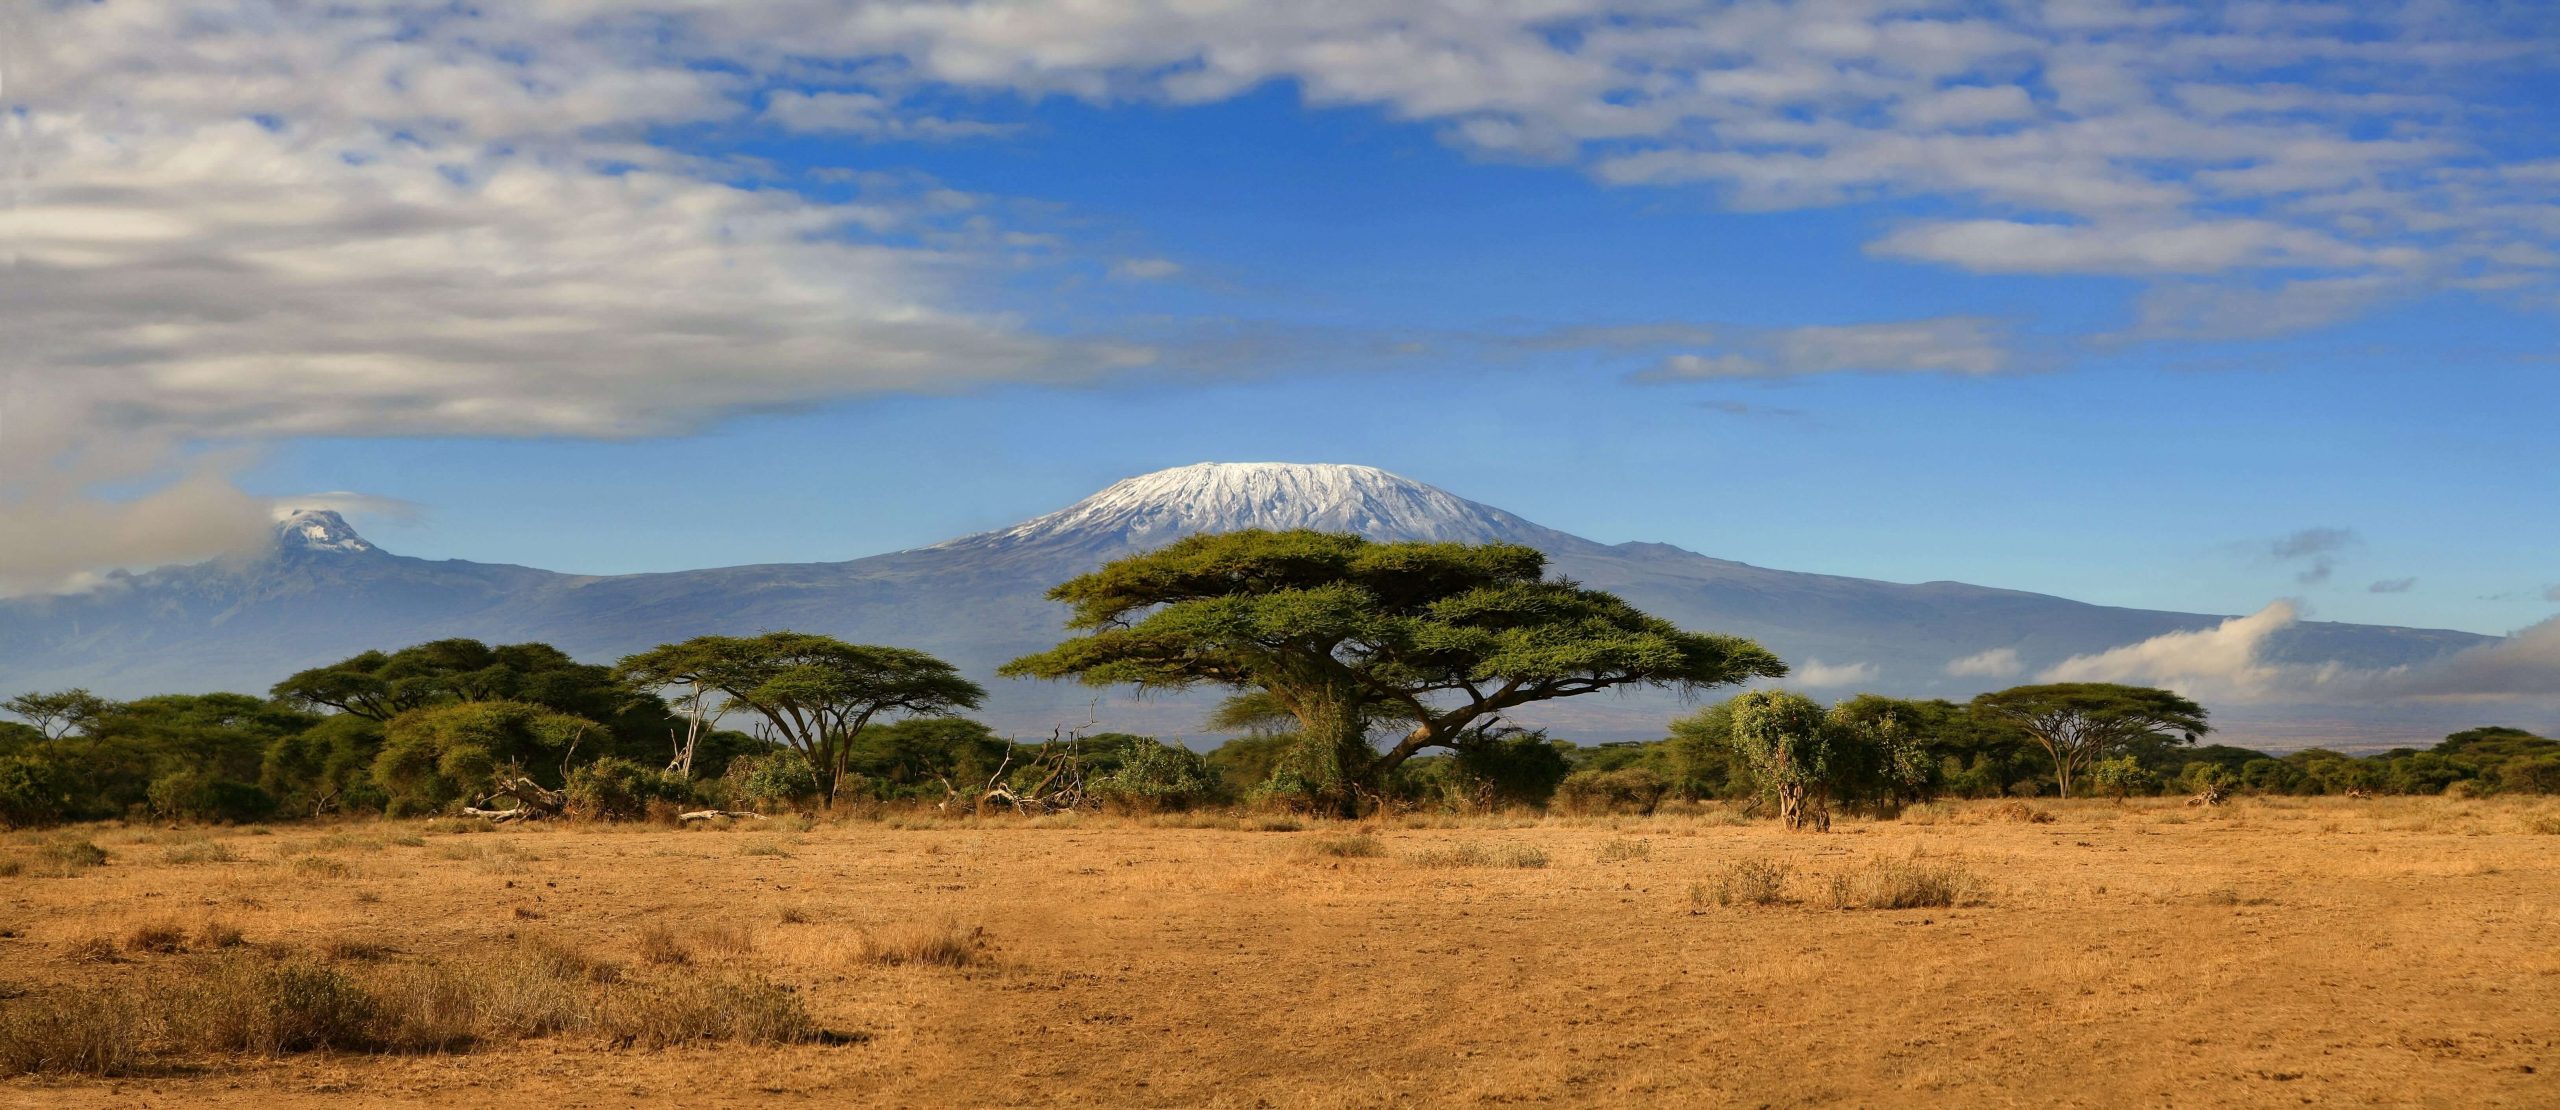 Kilimanjaro trekking, 7 days, Rongai Route